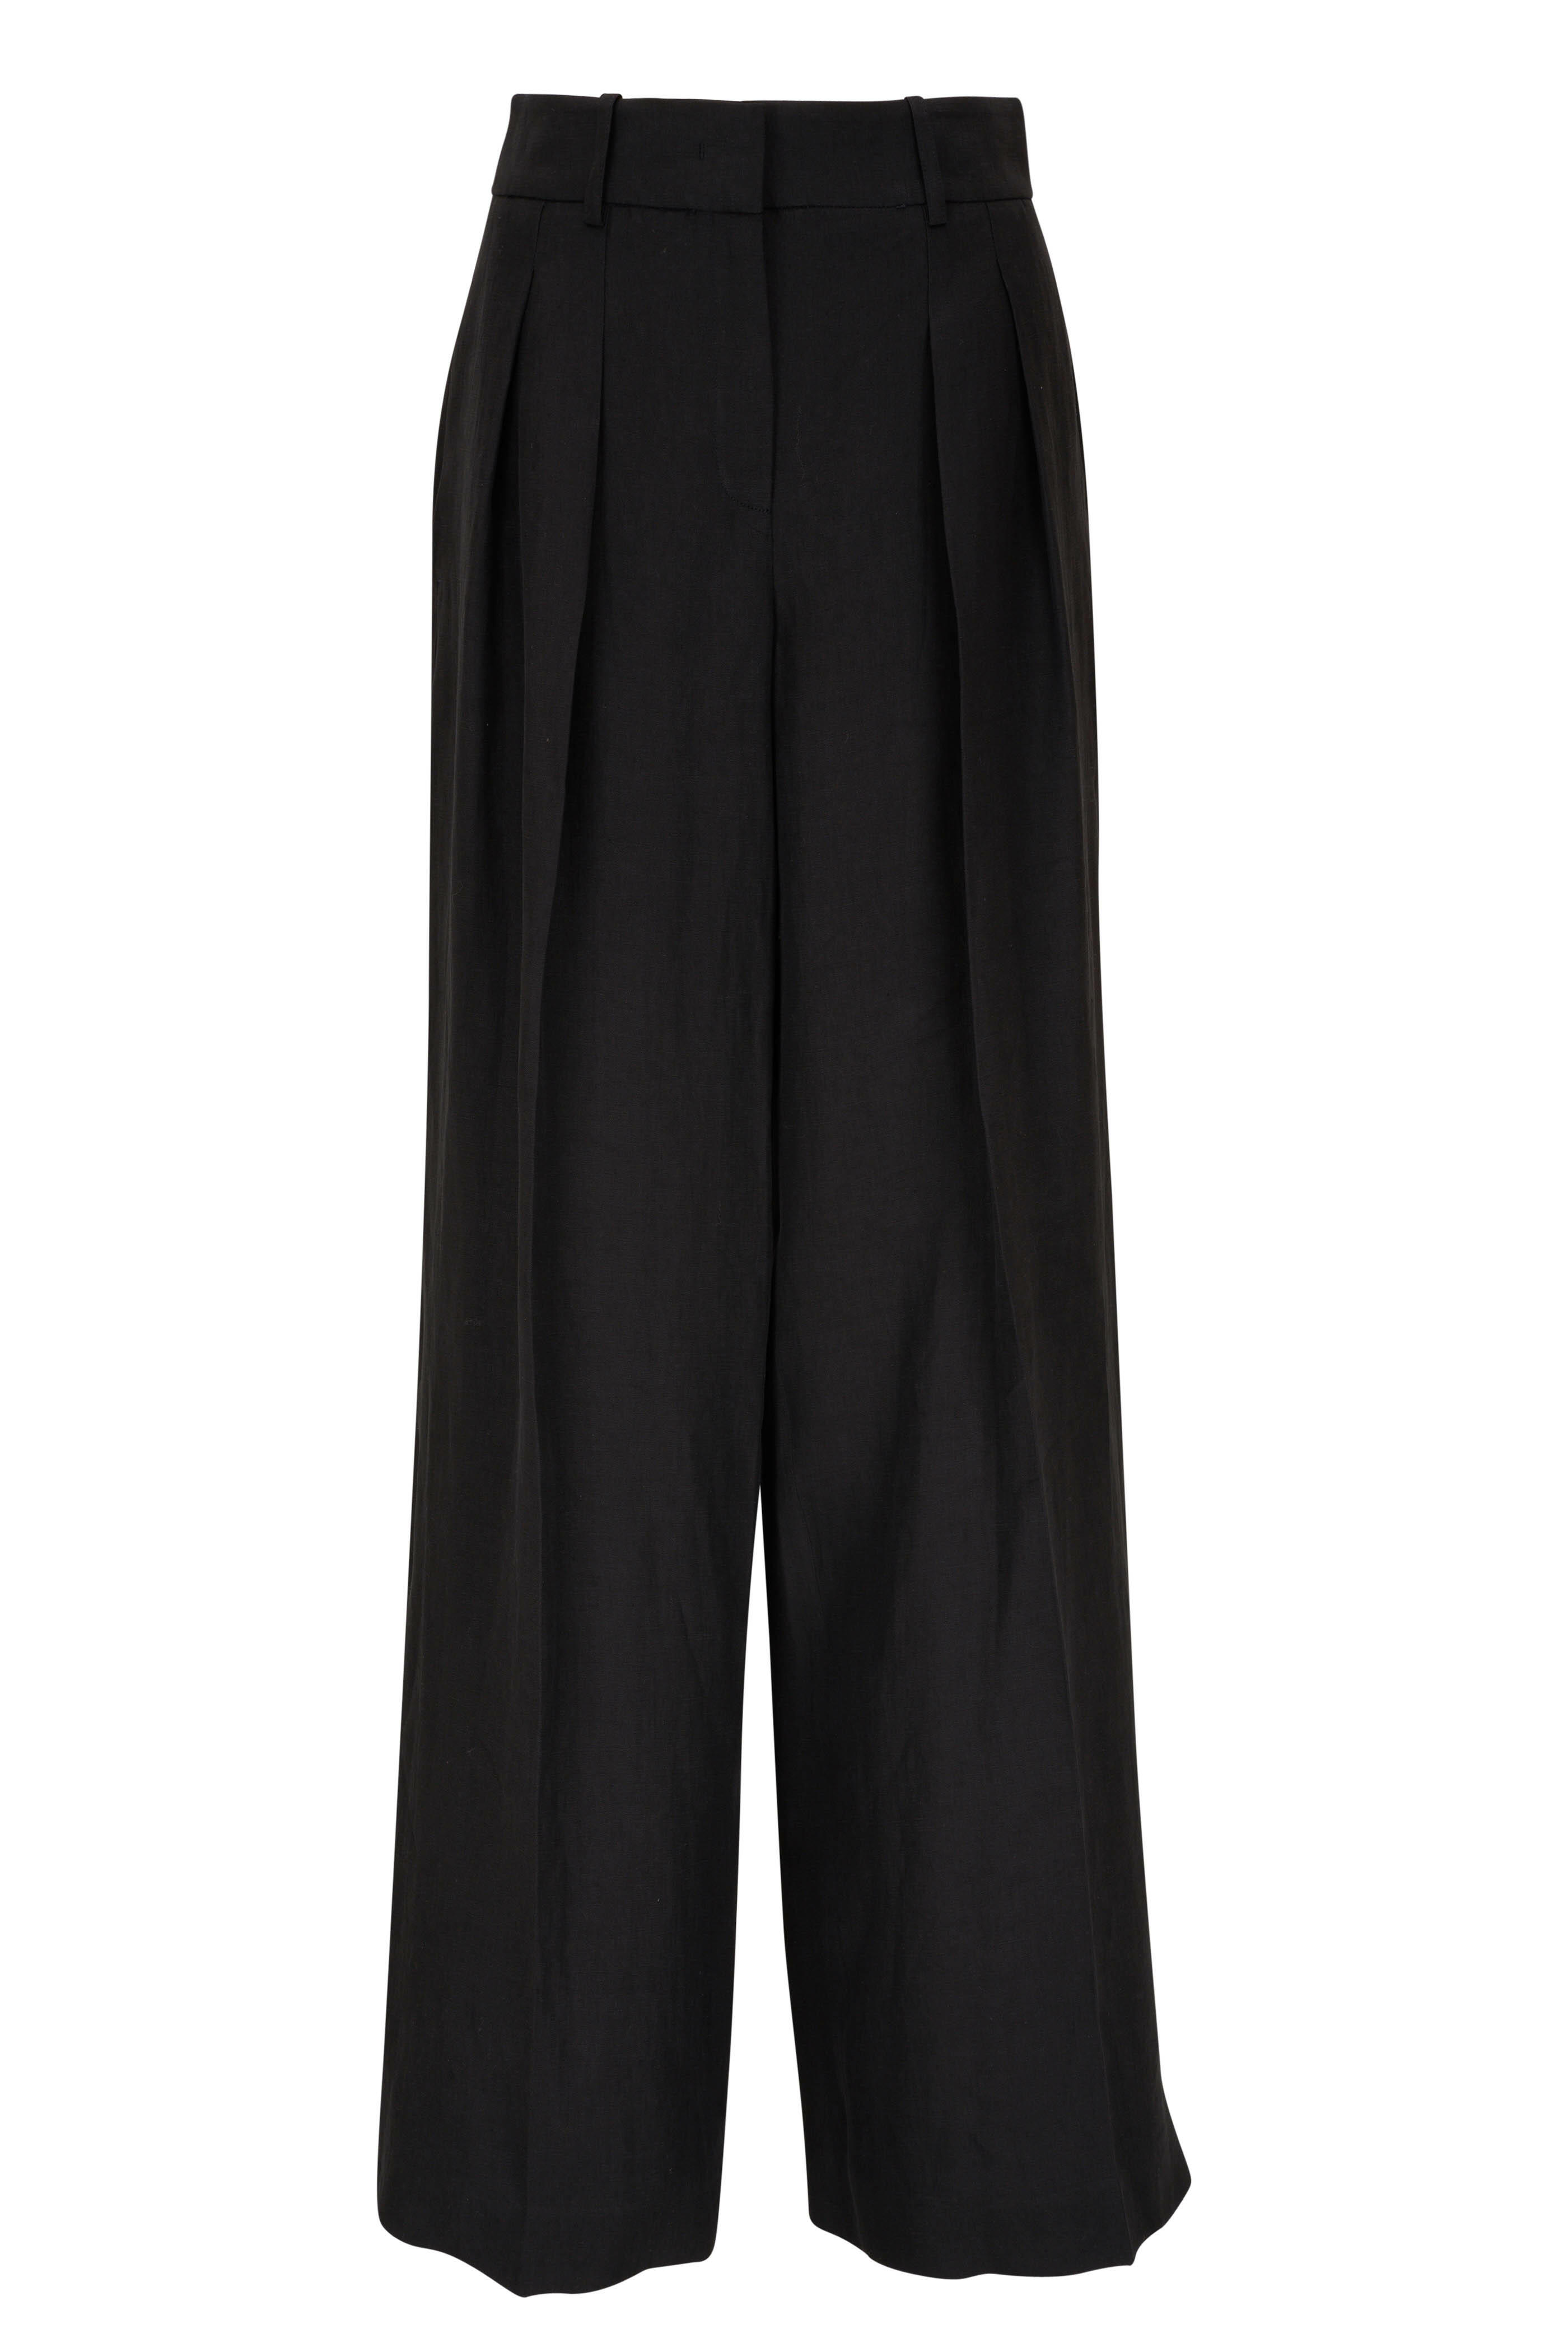 Michael Kors Collection - Black Linen Pleated Wide Leg Pant